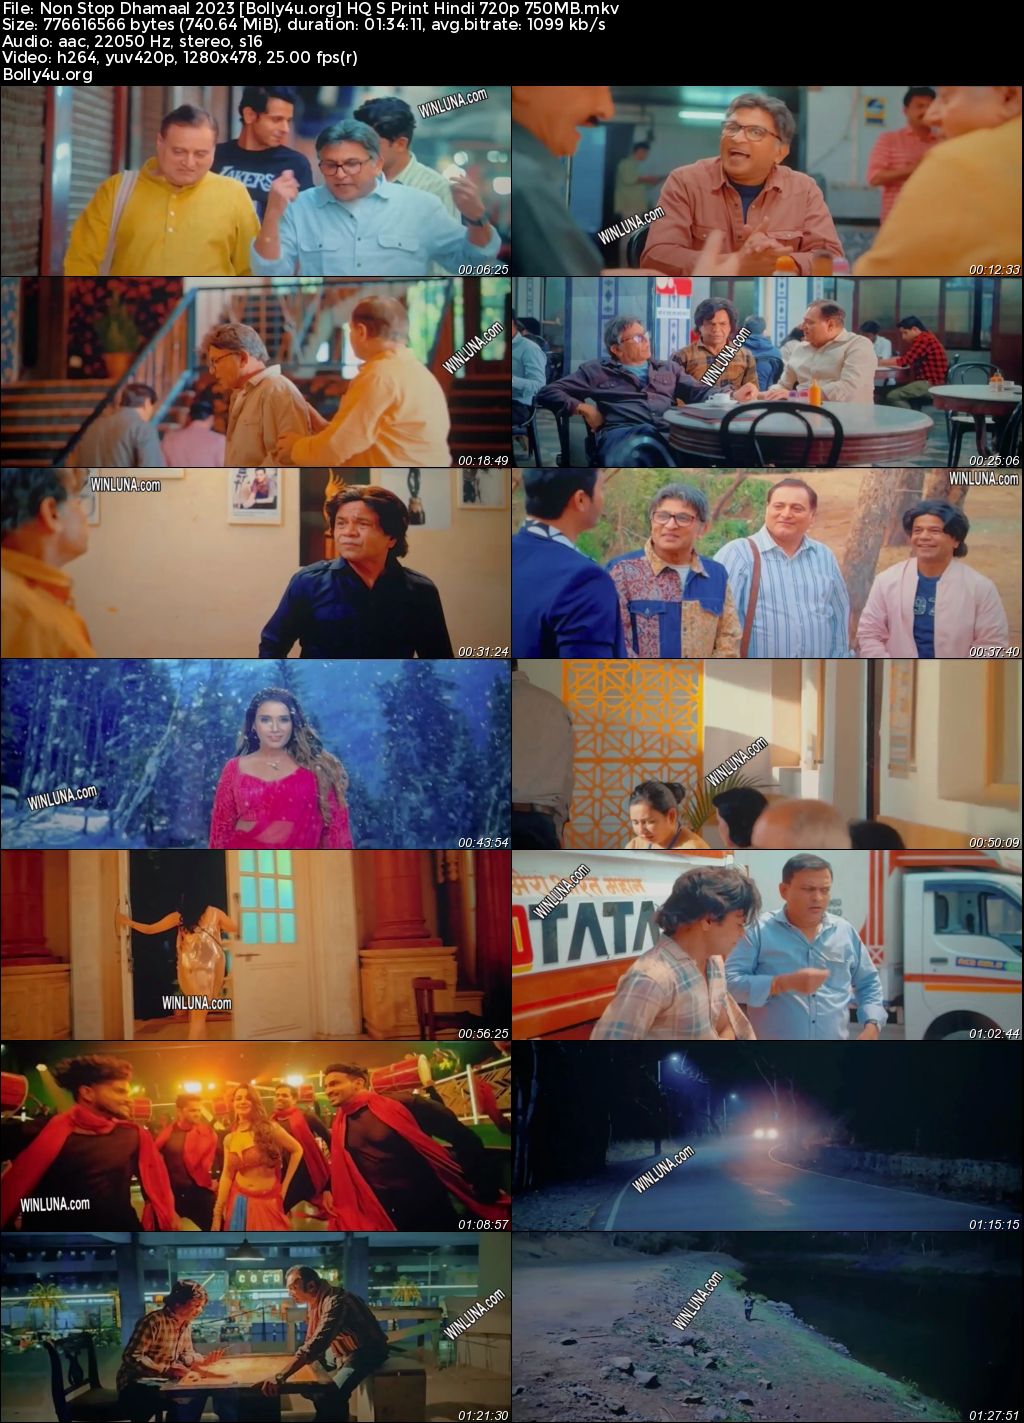 Non Stop Dhamaal 2023 HQ S Print Hindi Full Movie Download 1080p 720p 480p